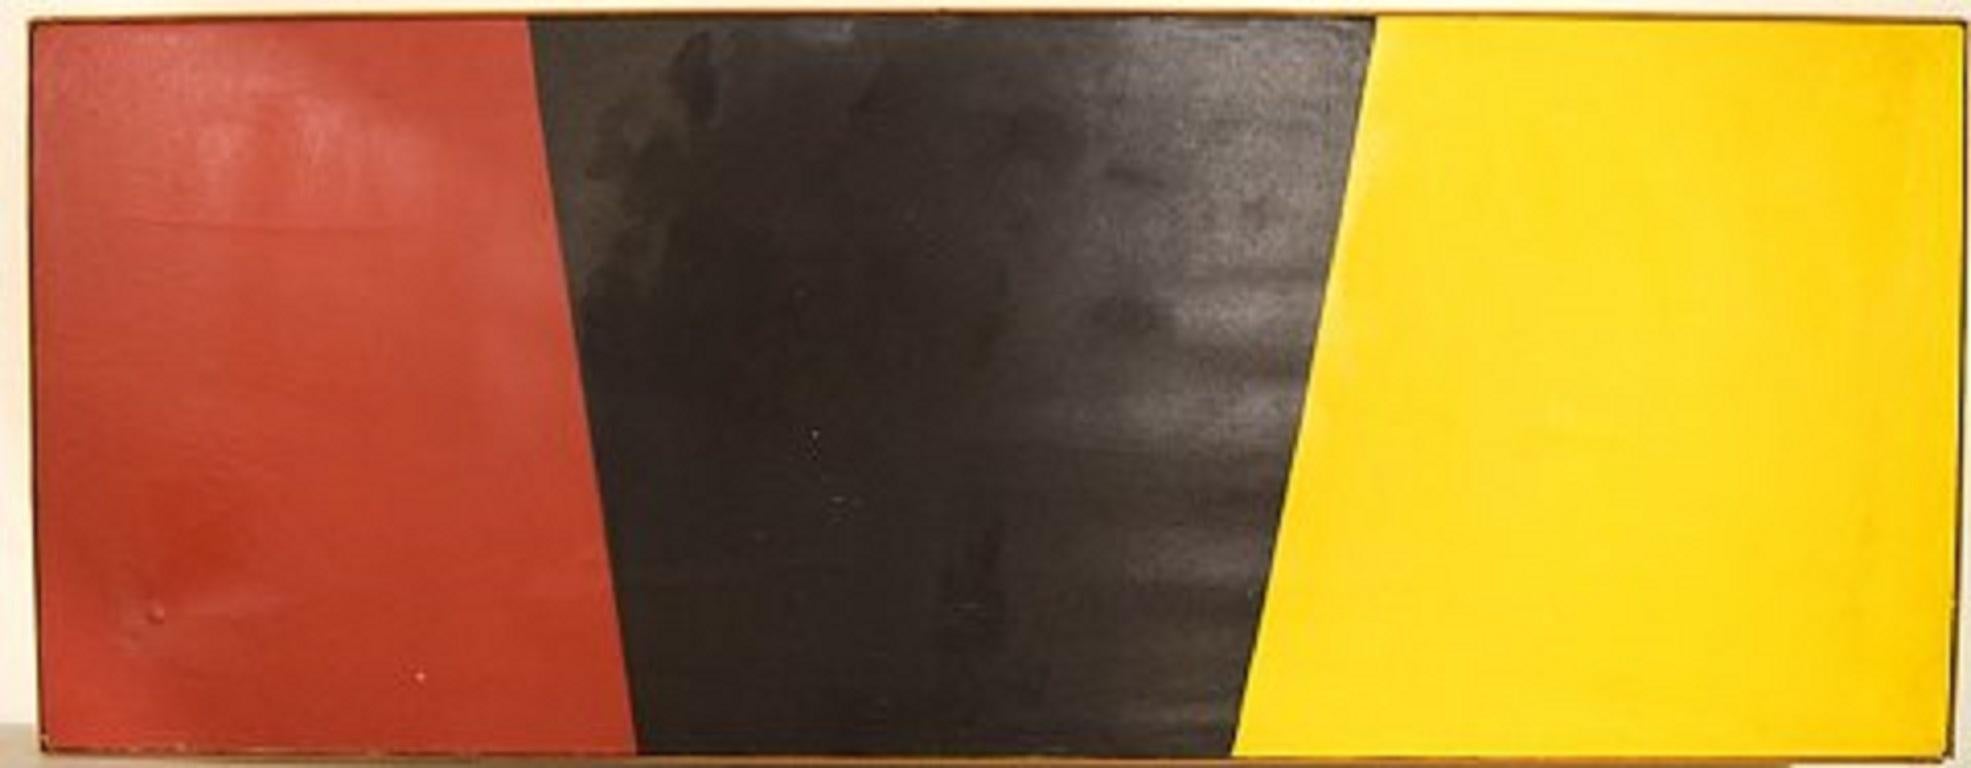 Karl Brücher Henriksen (1891-1976), Denmark. Concrete composition, oil on canvas, circa 1970.
The canvas measures: 166 x 63 cm.
The frame measures: 0.7 cm.
In good condition.